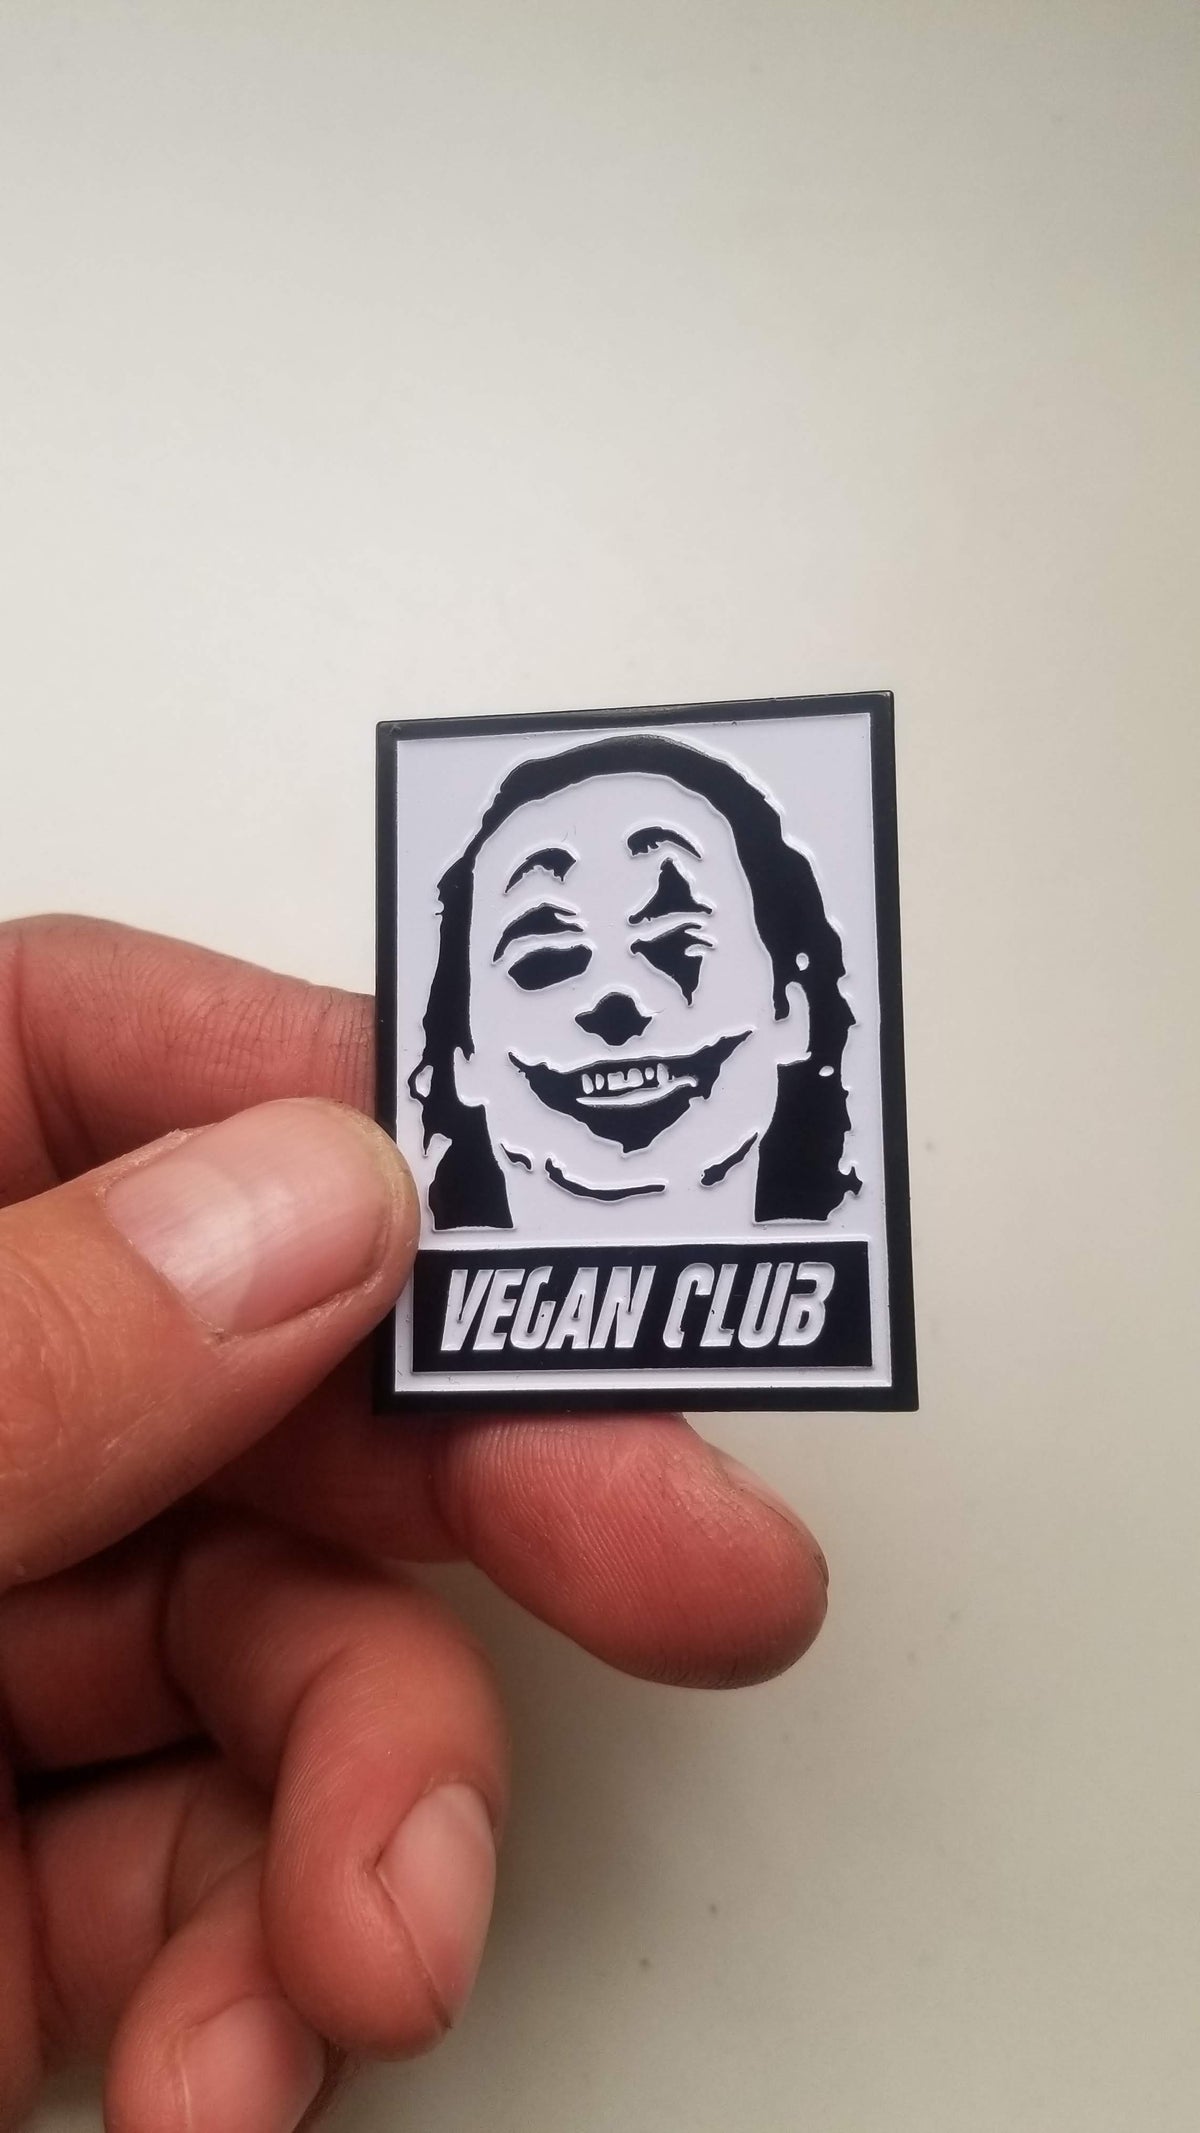 Vegan Club Pin featuring the Joker